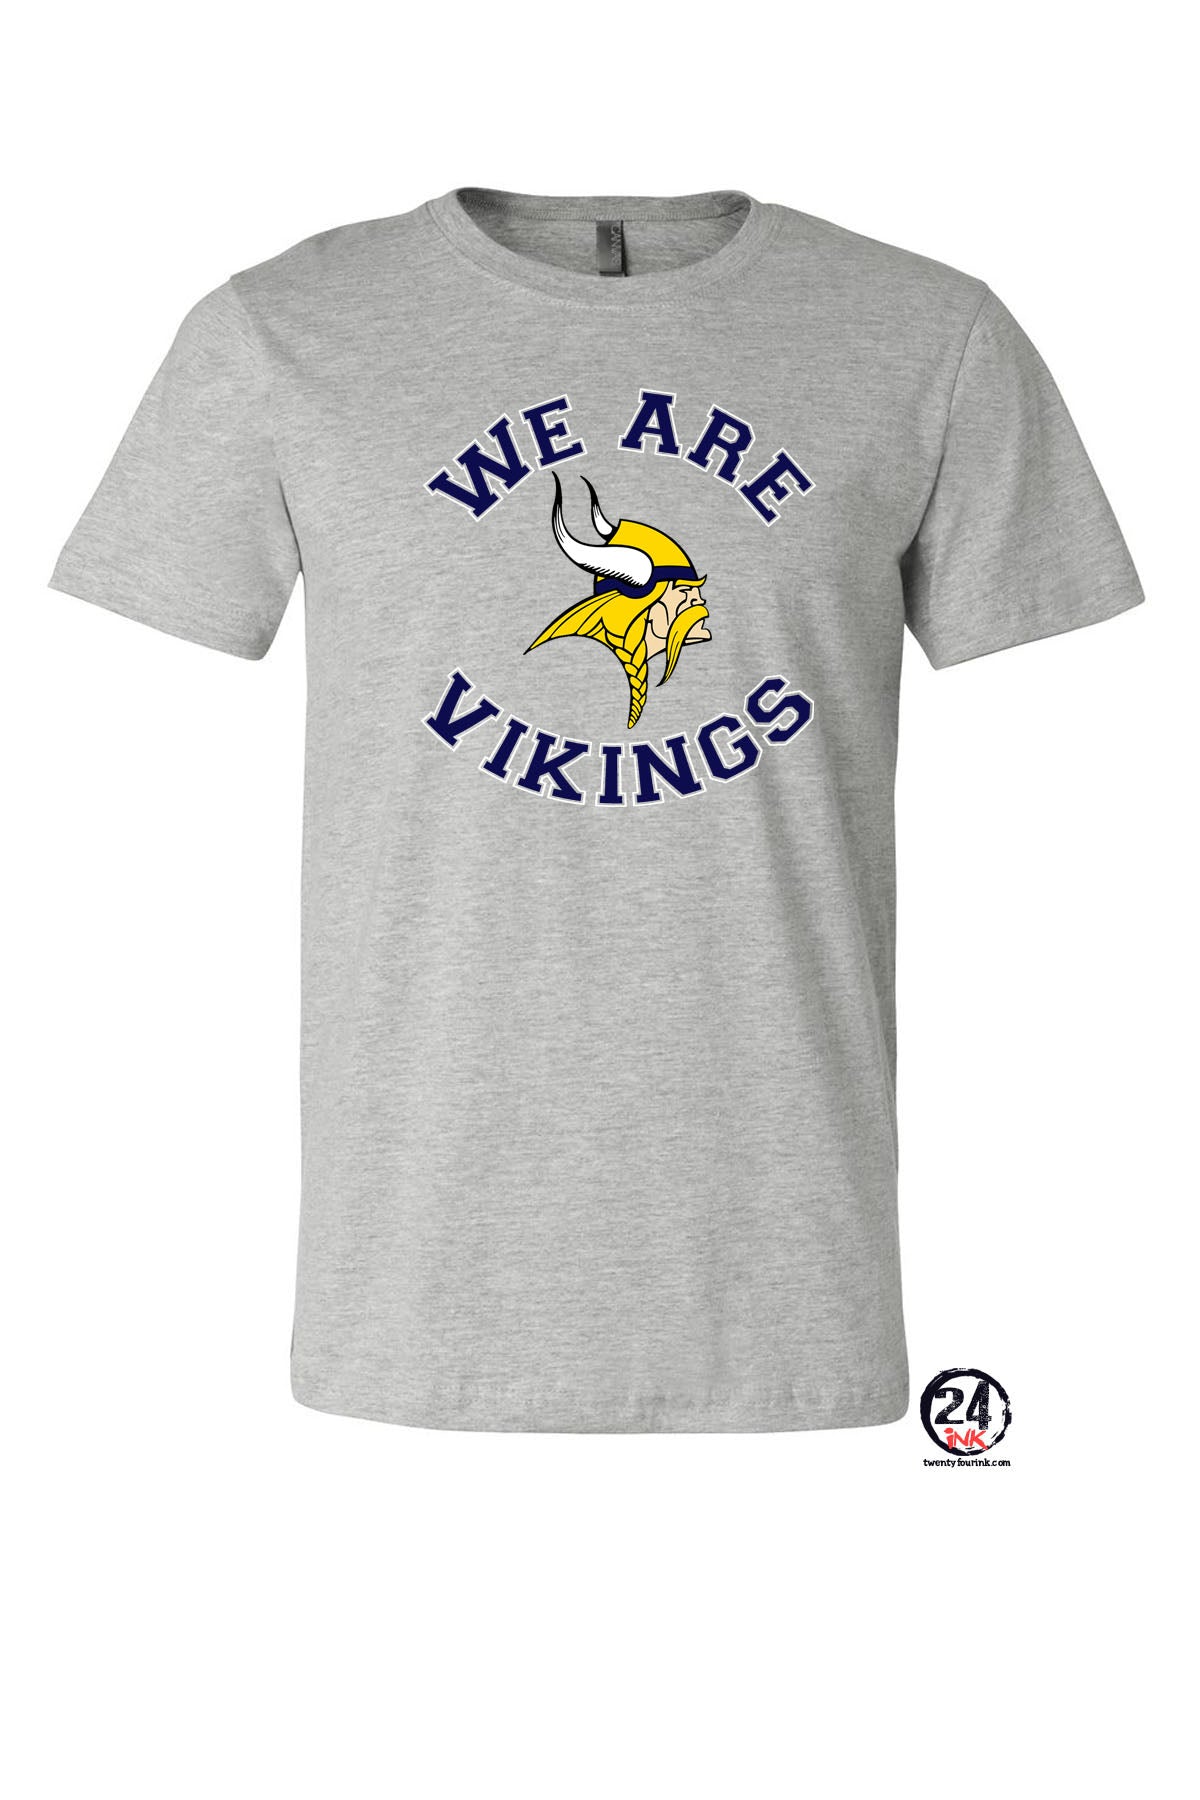 We are Vikings T-Shirt